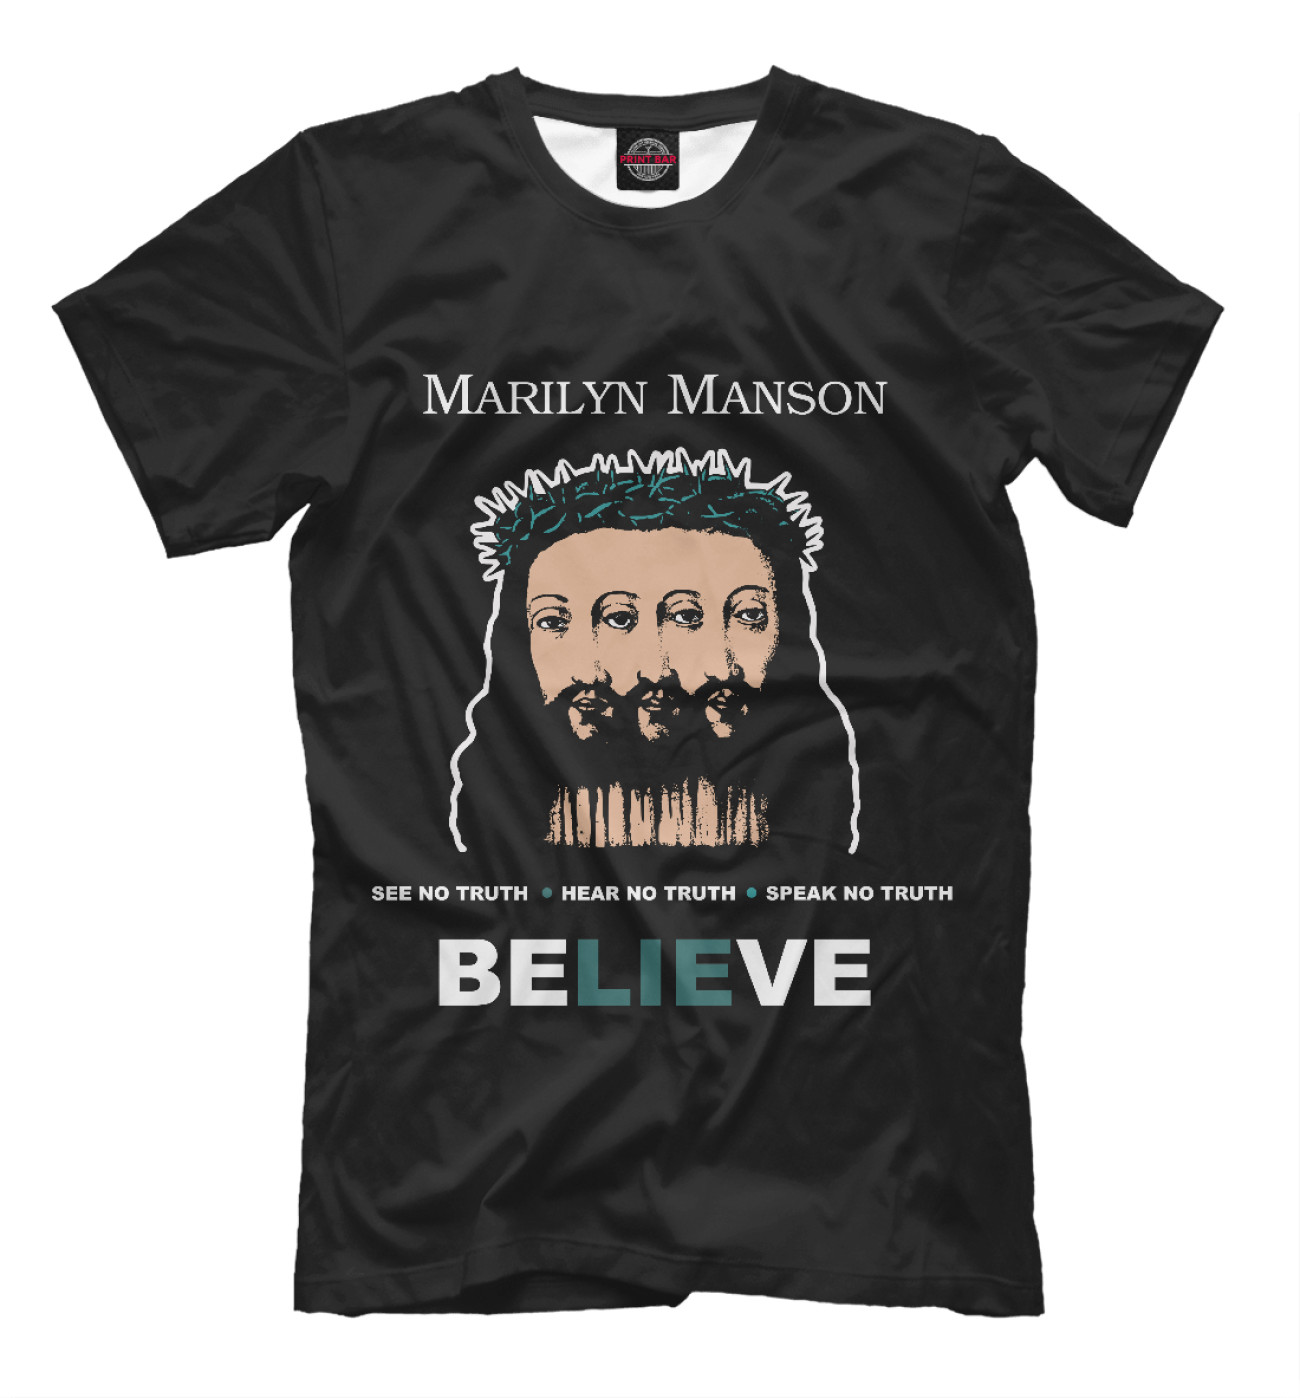 Мужская Футболка Marilyn Manson, артикул: MRM-166735-fut-2